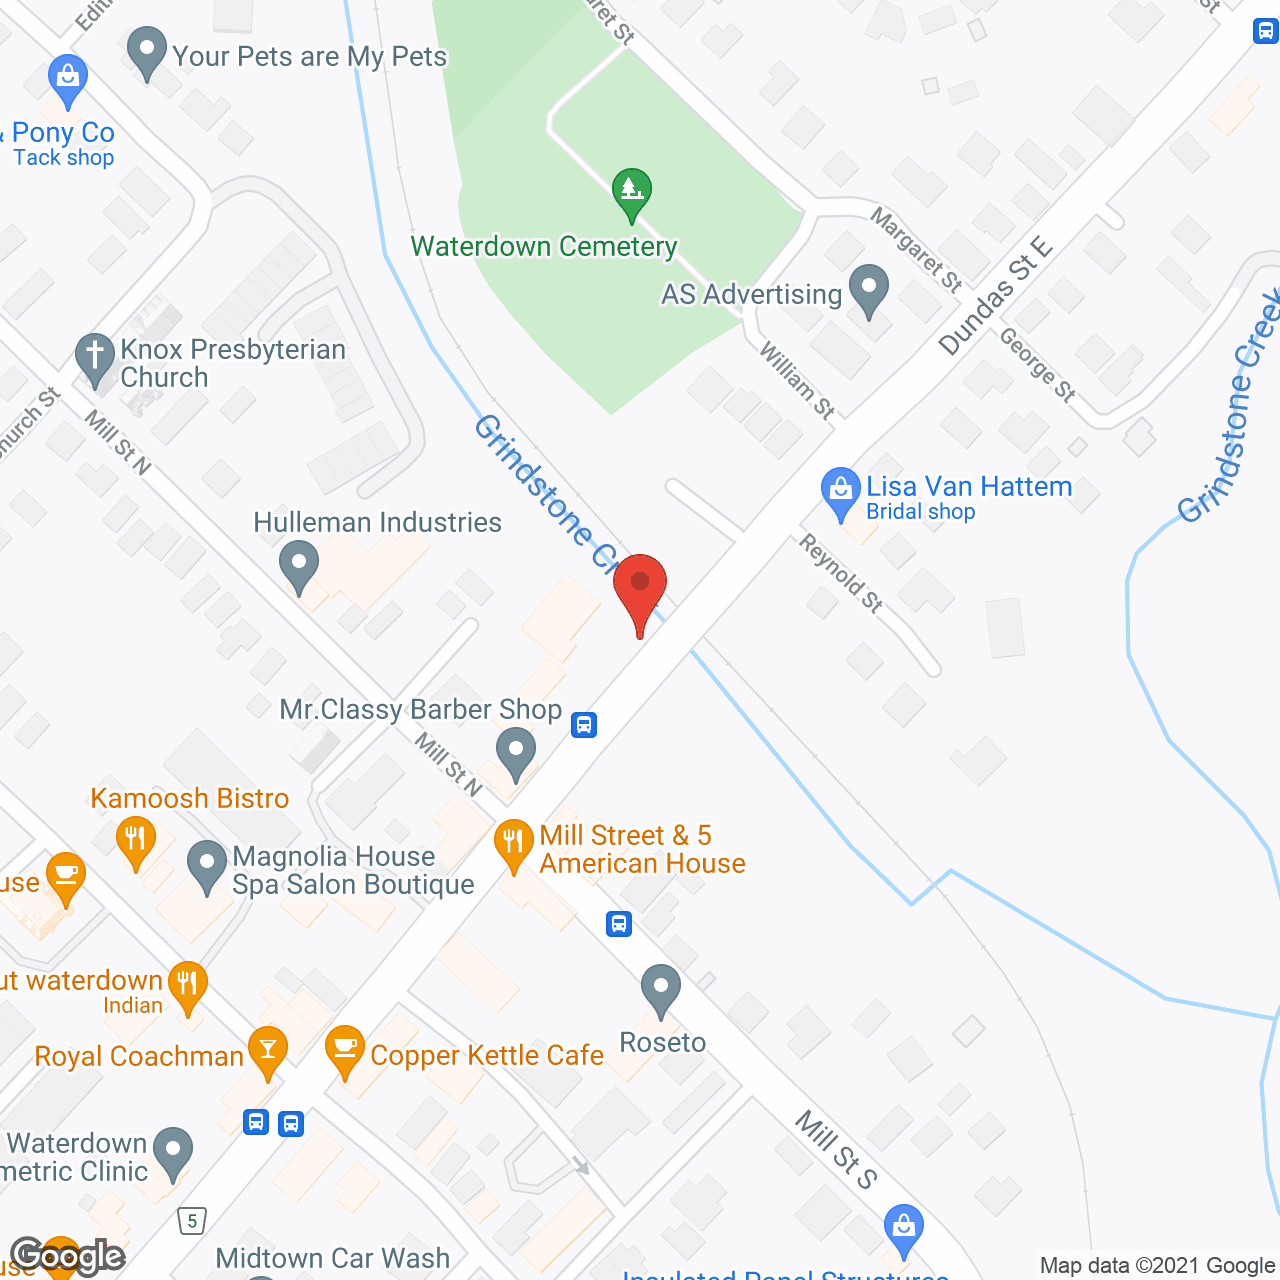 Waterdown Manor in google map